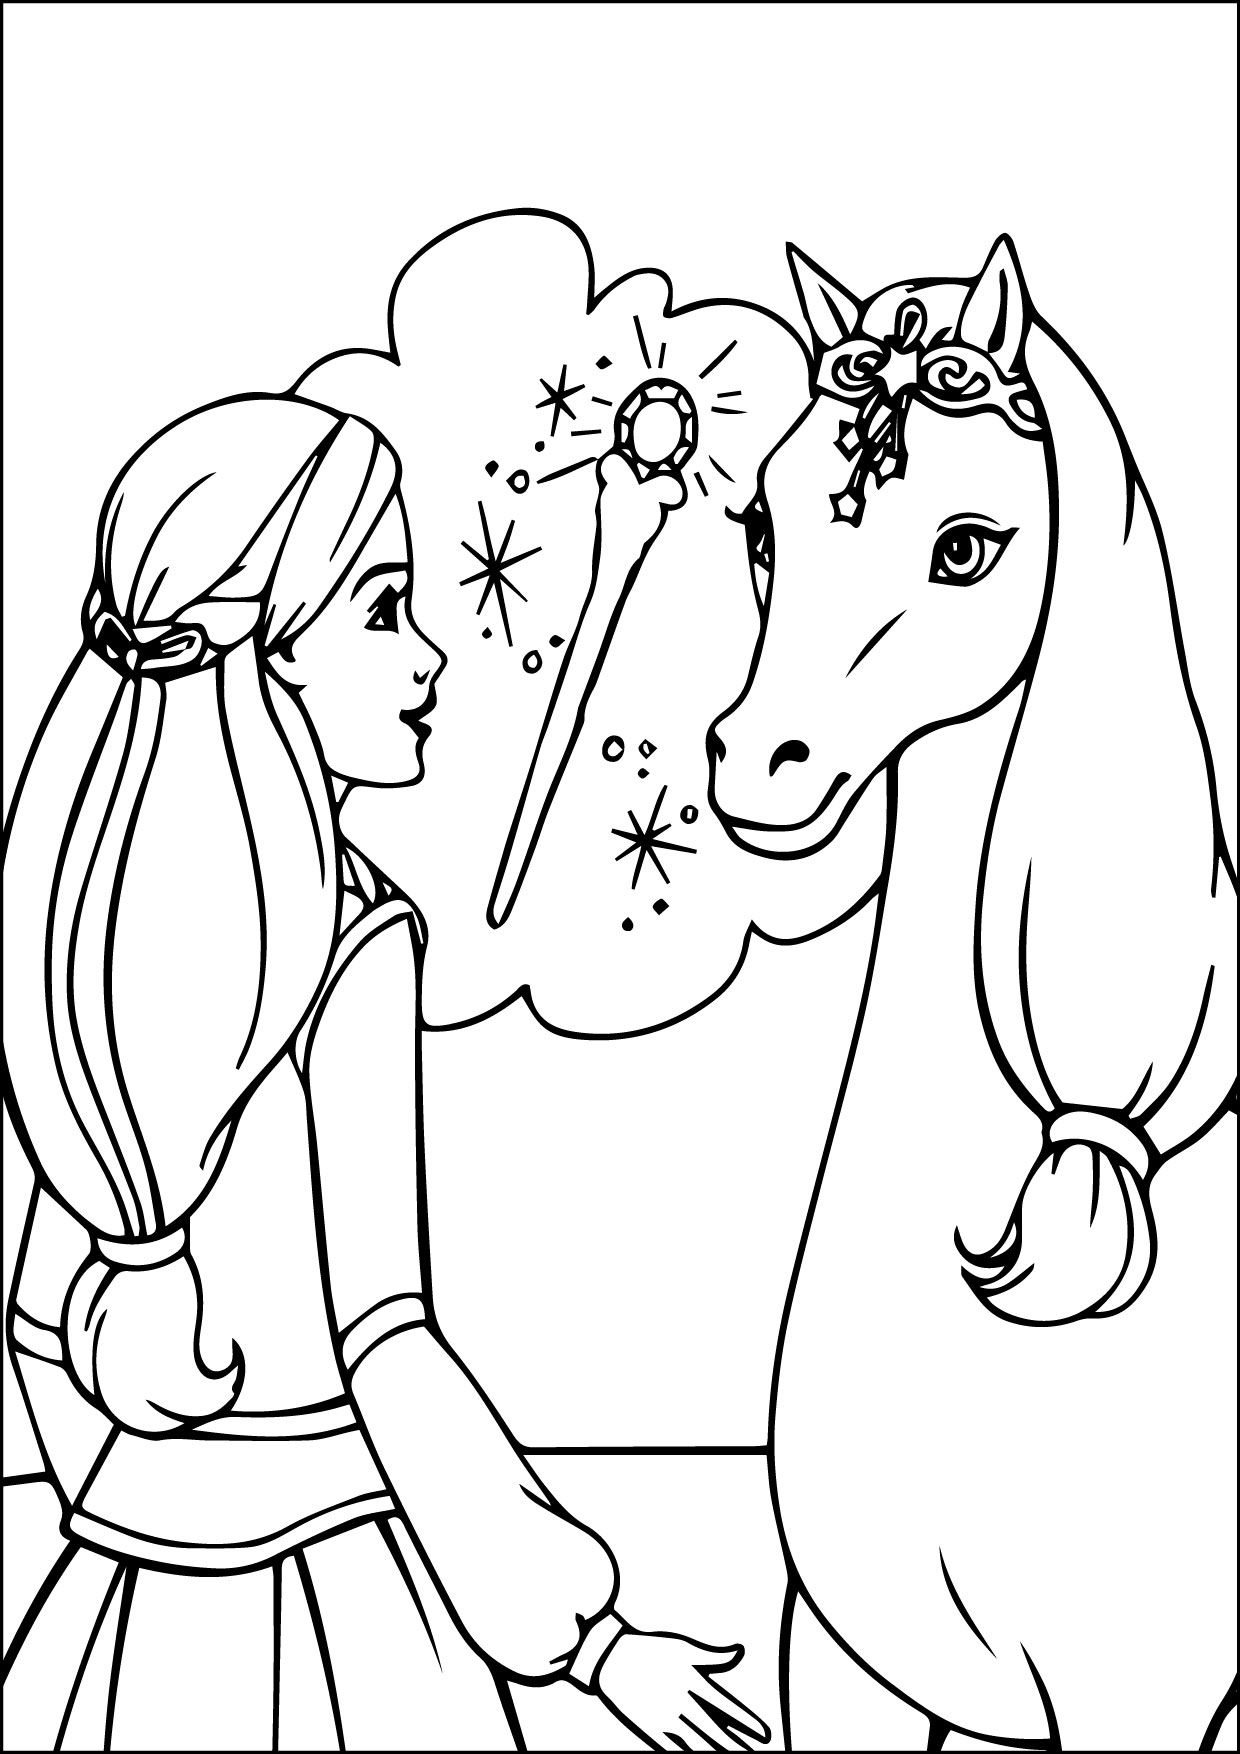 barbie unicorn coloring pages